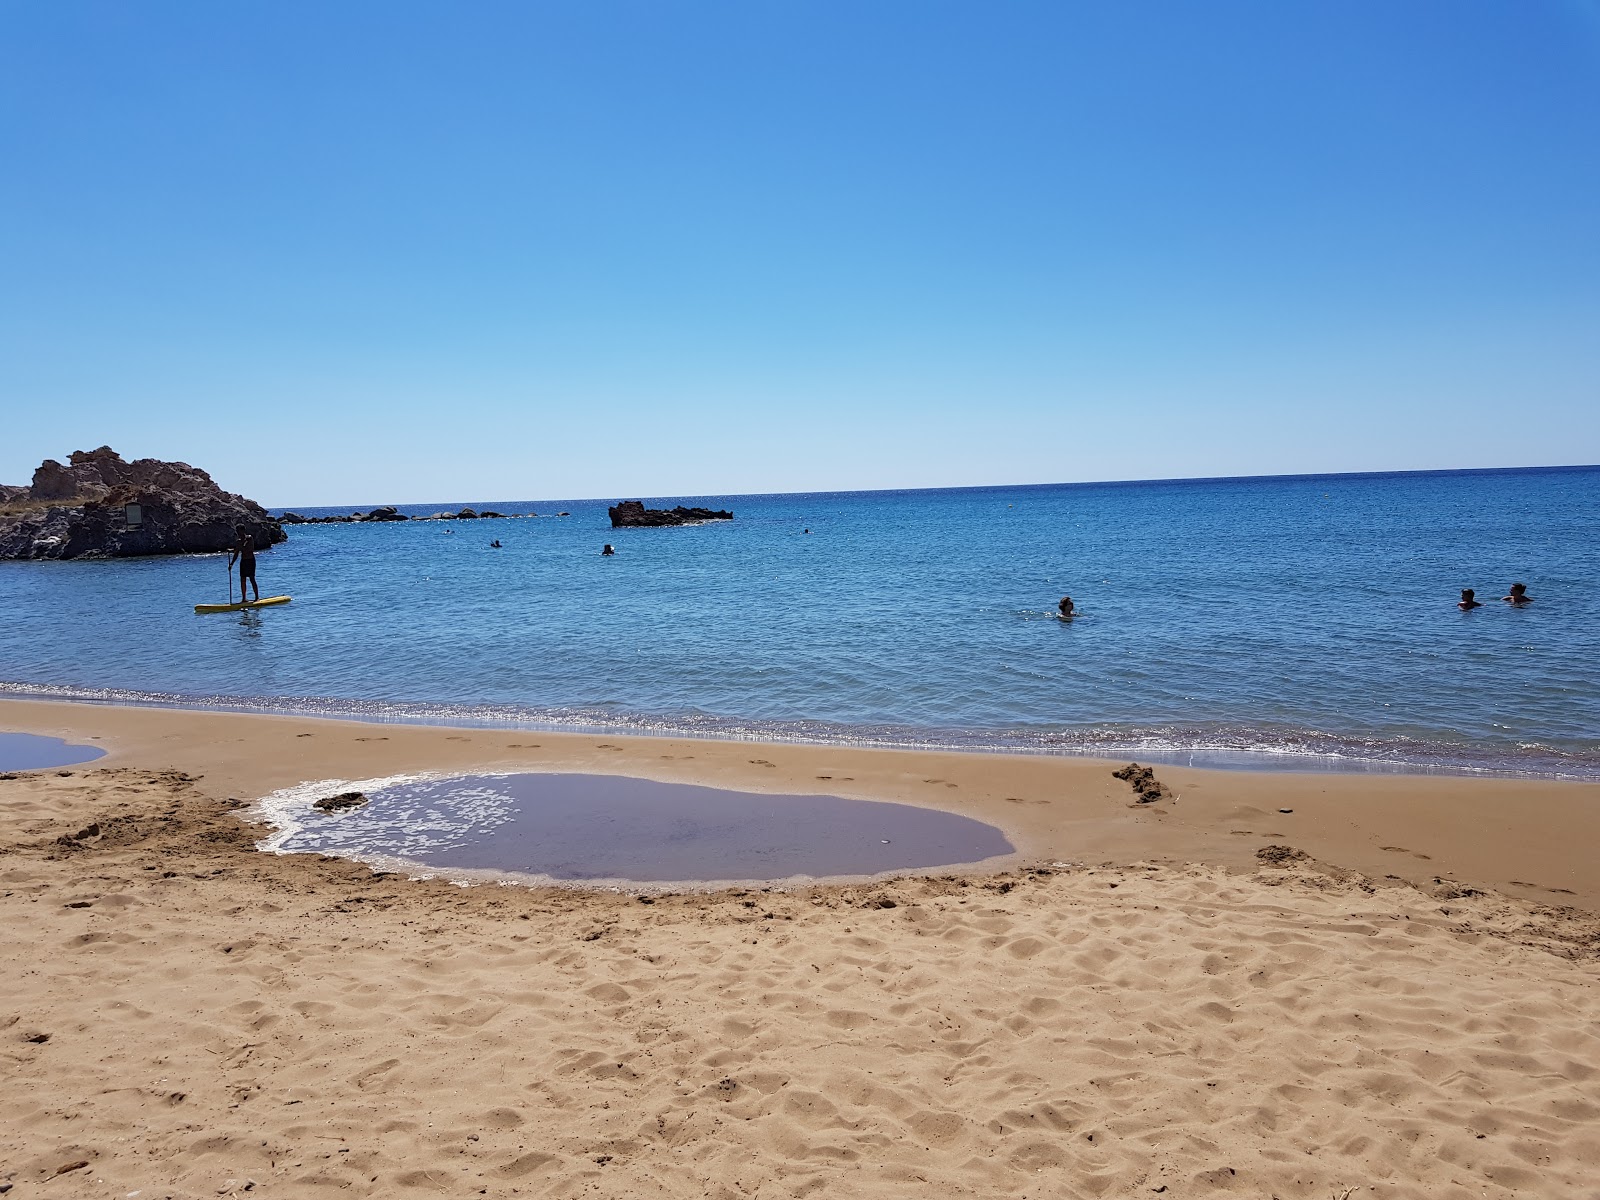 Fotografie cu Agios Ioannis beach cu golful spațios